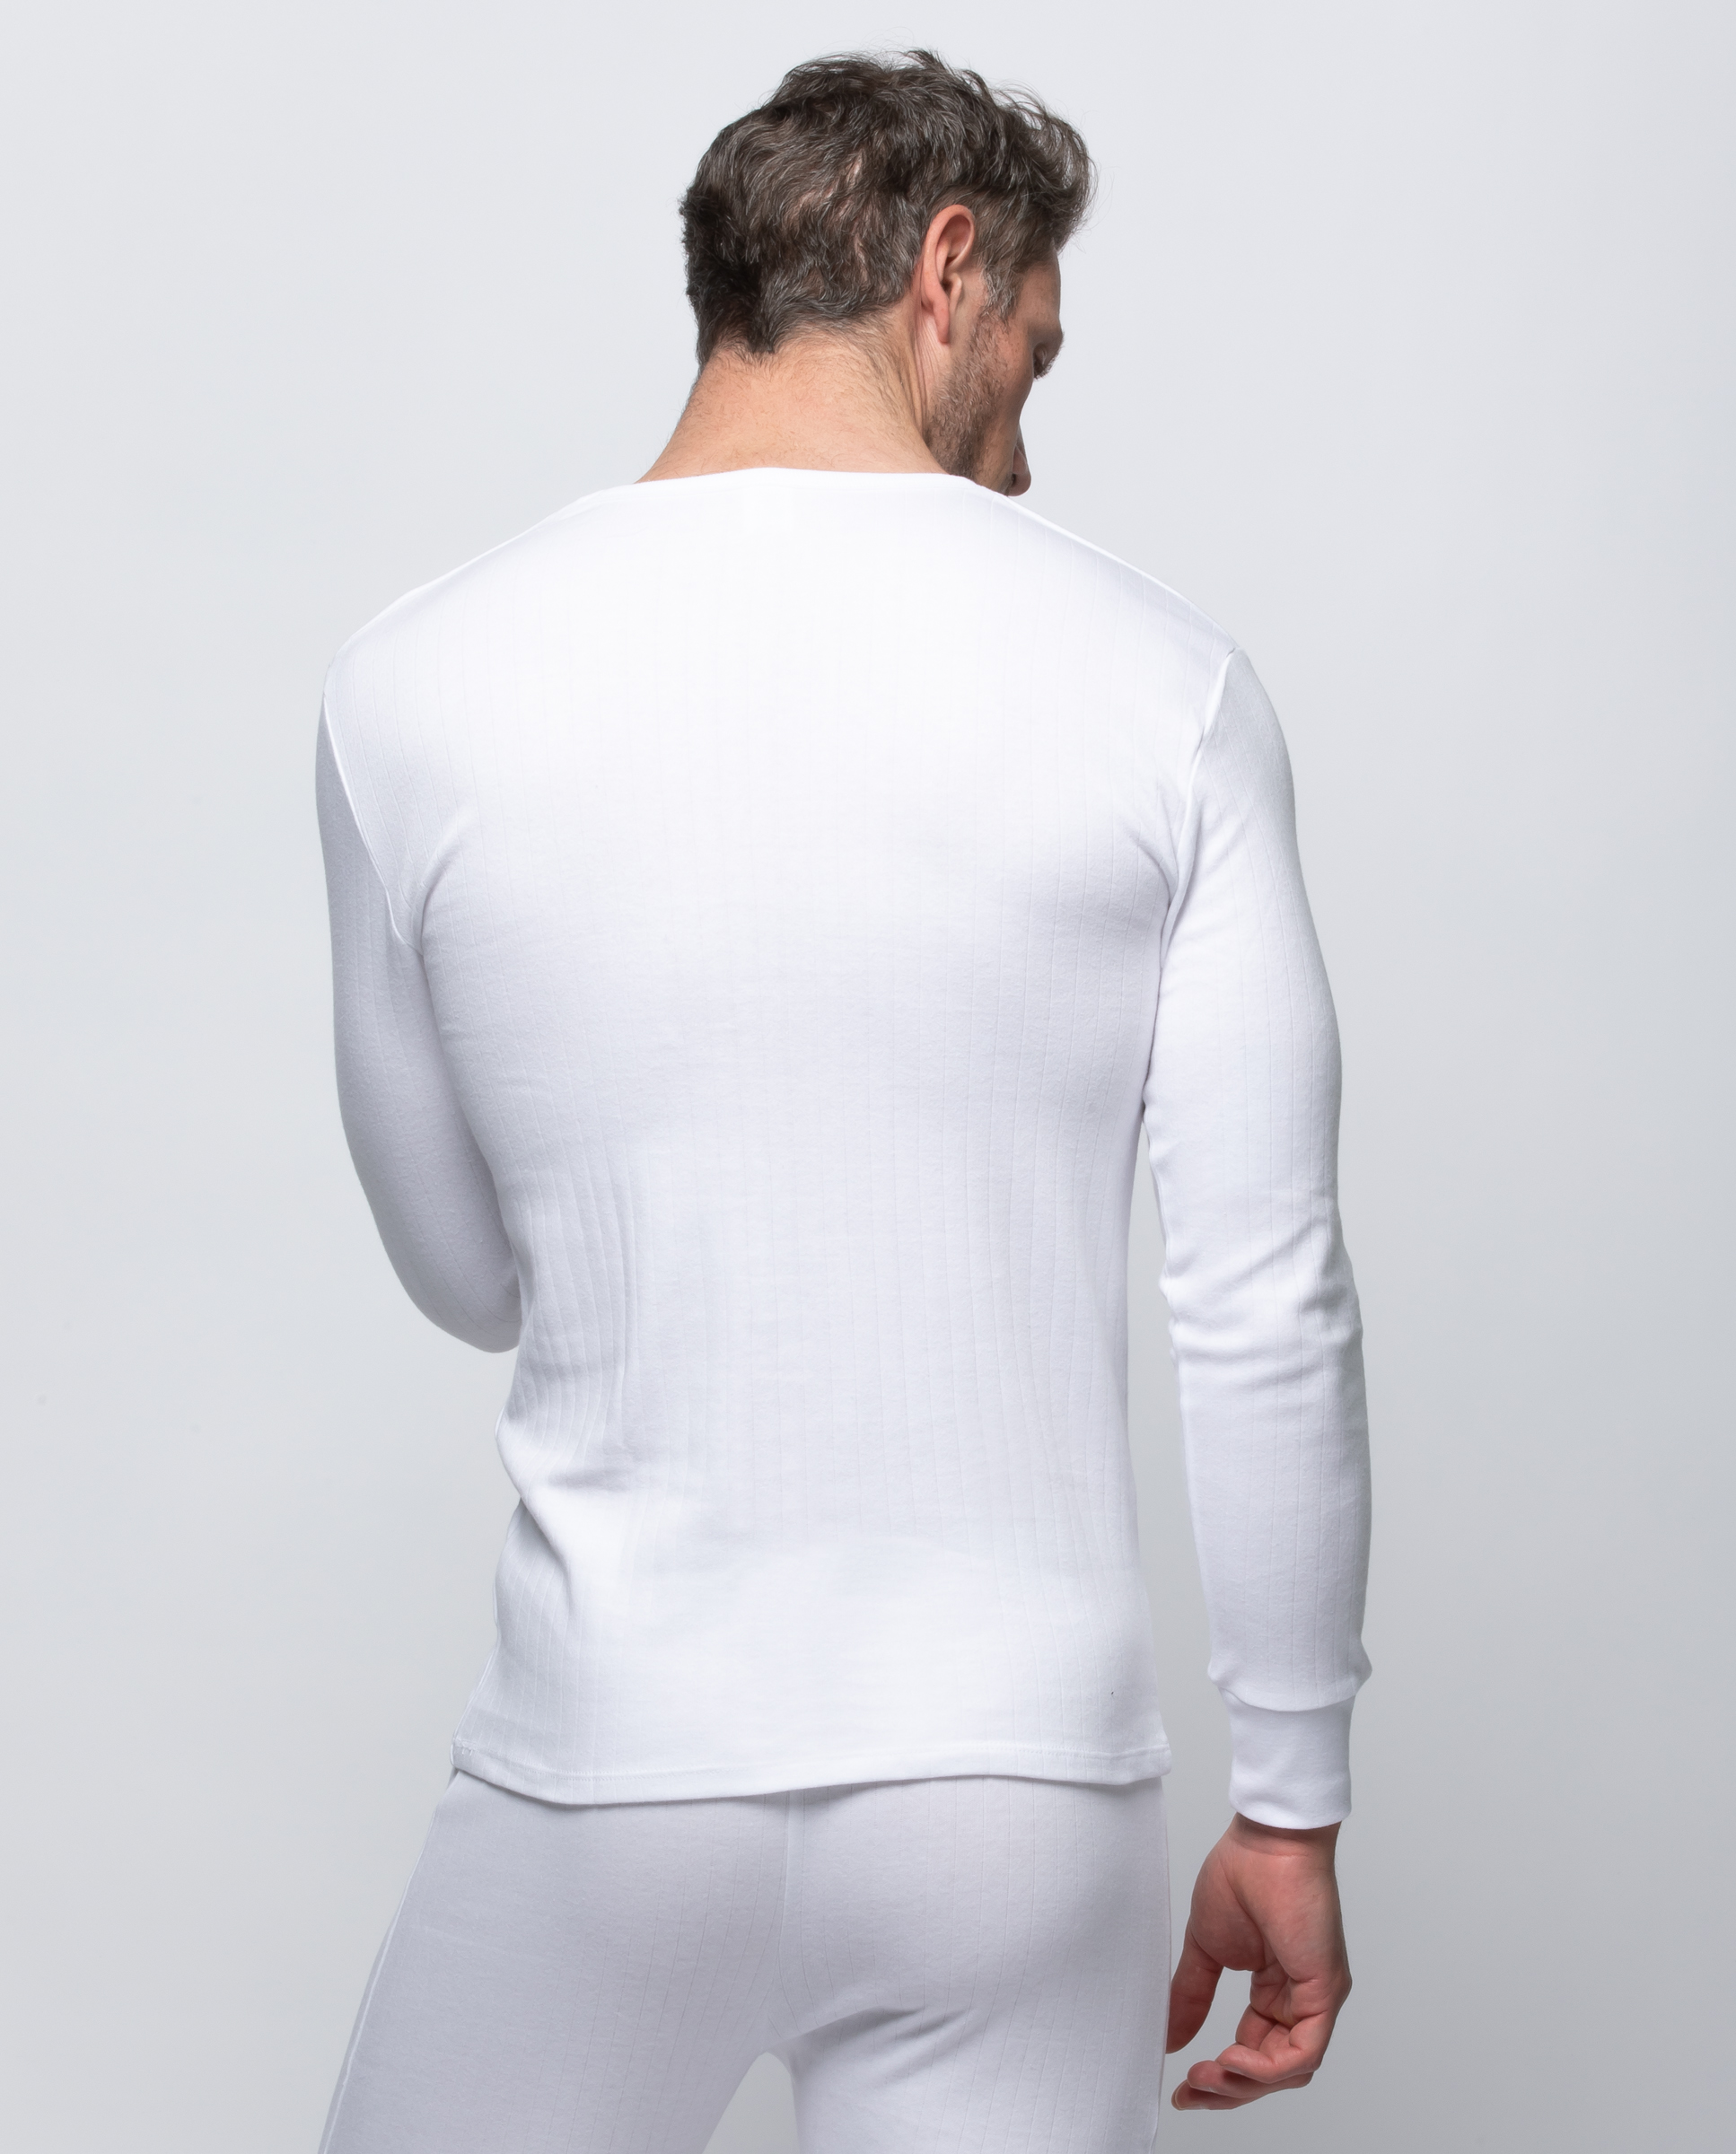 Ropa interior térmica de invierno para hombre, Tops informales de Color  sólido, camiseta gruesa de manga larga - AliExpress